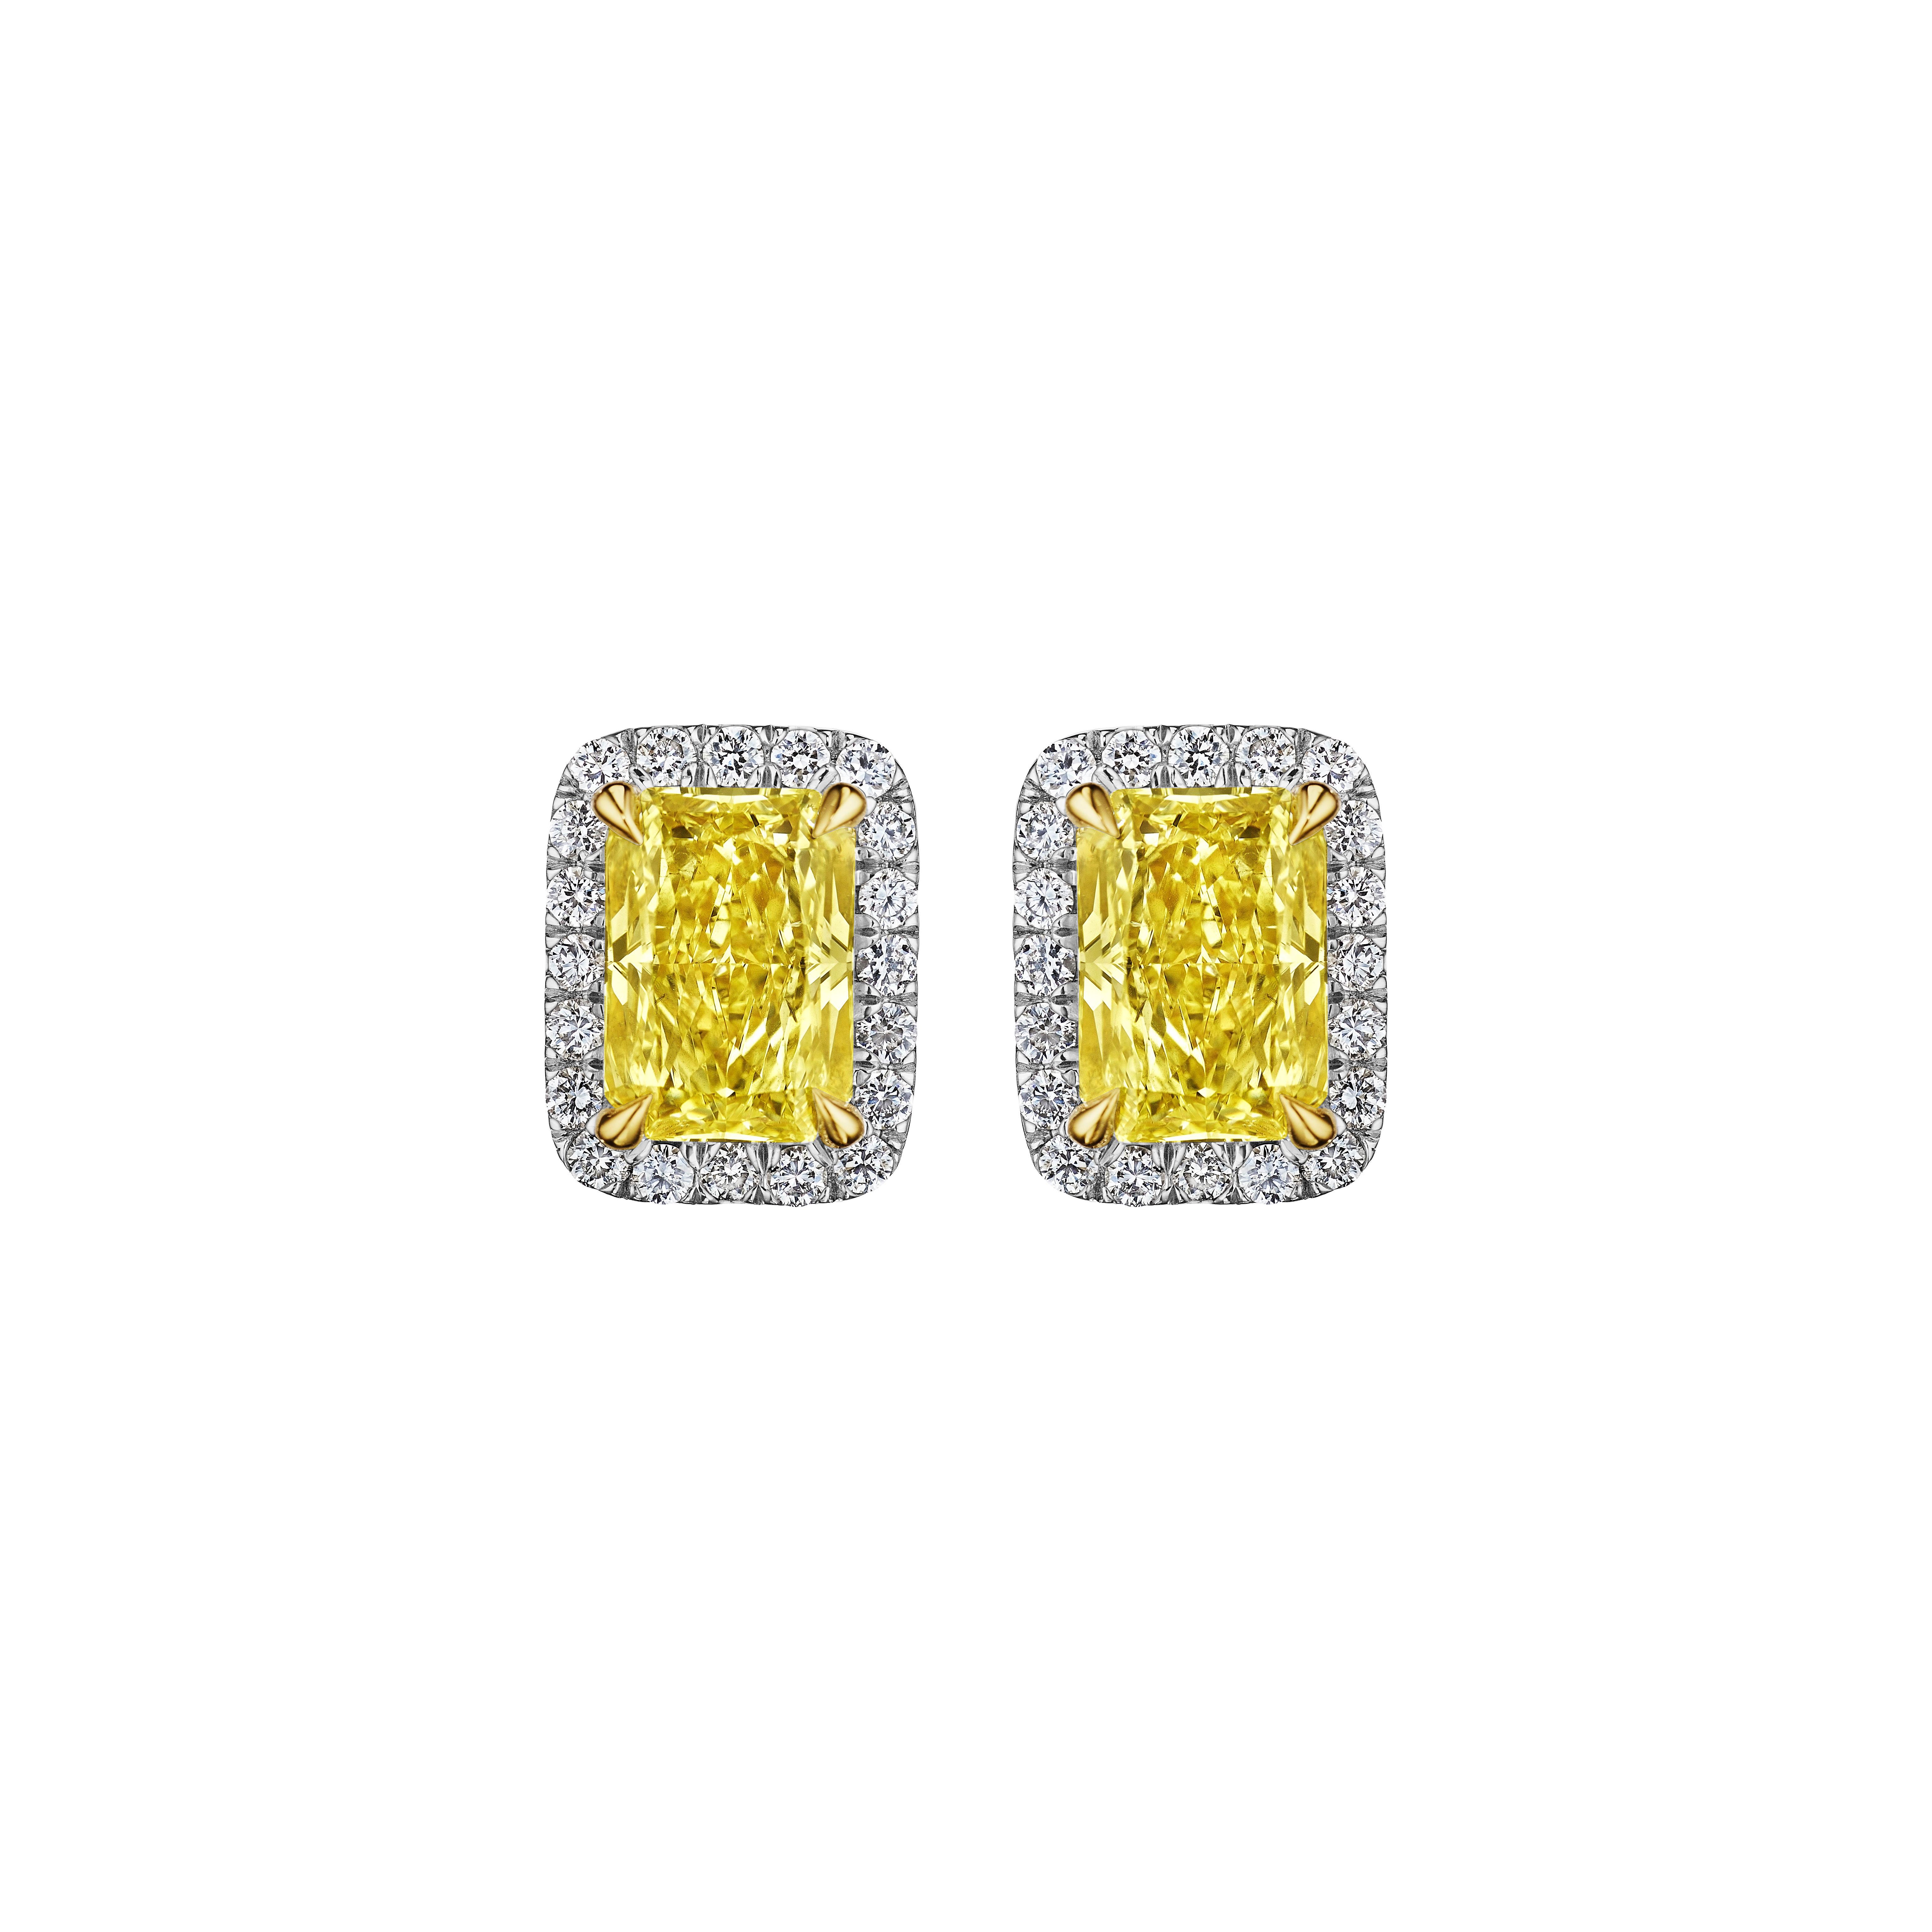 Radiant Cut 2.83ct GIA Certified Fancy Yellow Radiant Diamond Halo Earrings in 18KT Gold For Sale